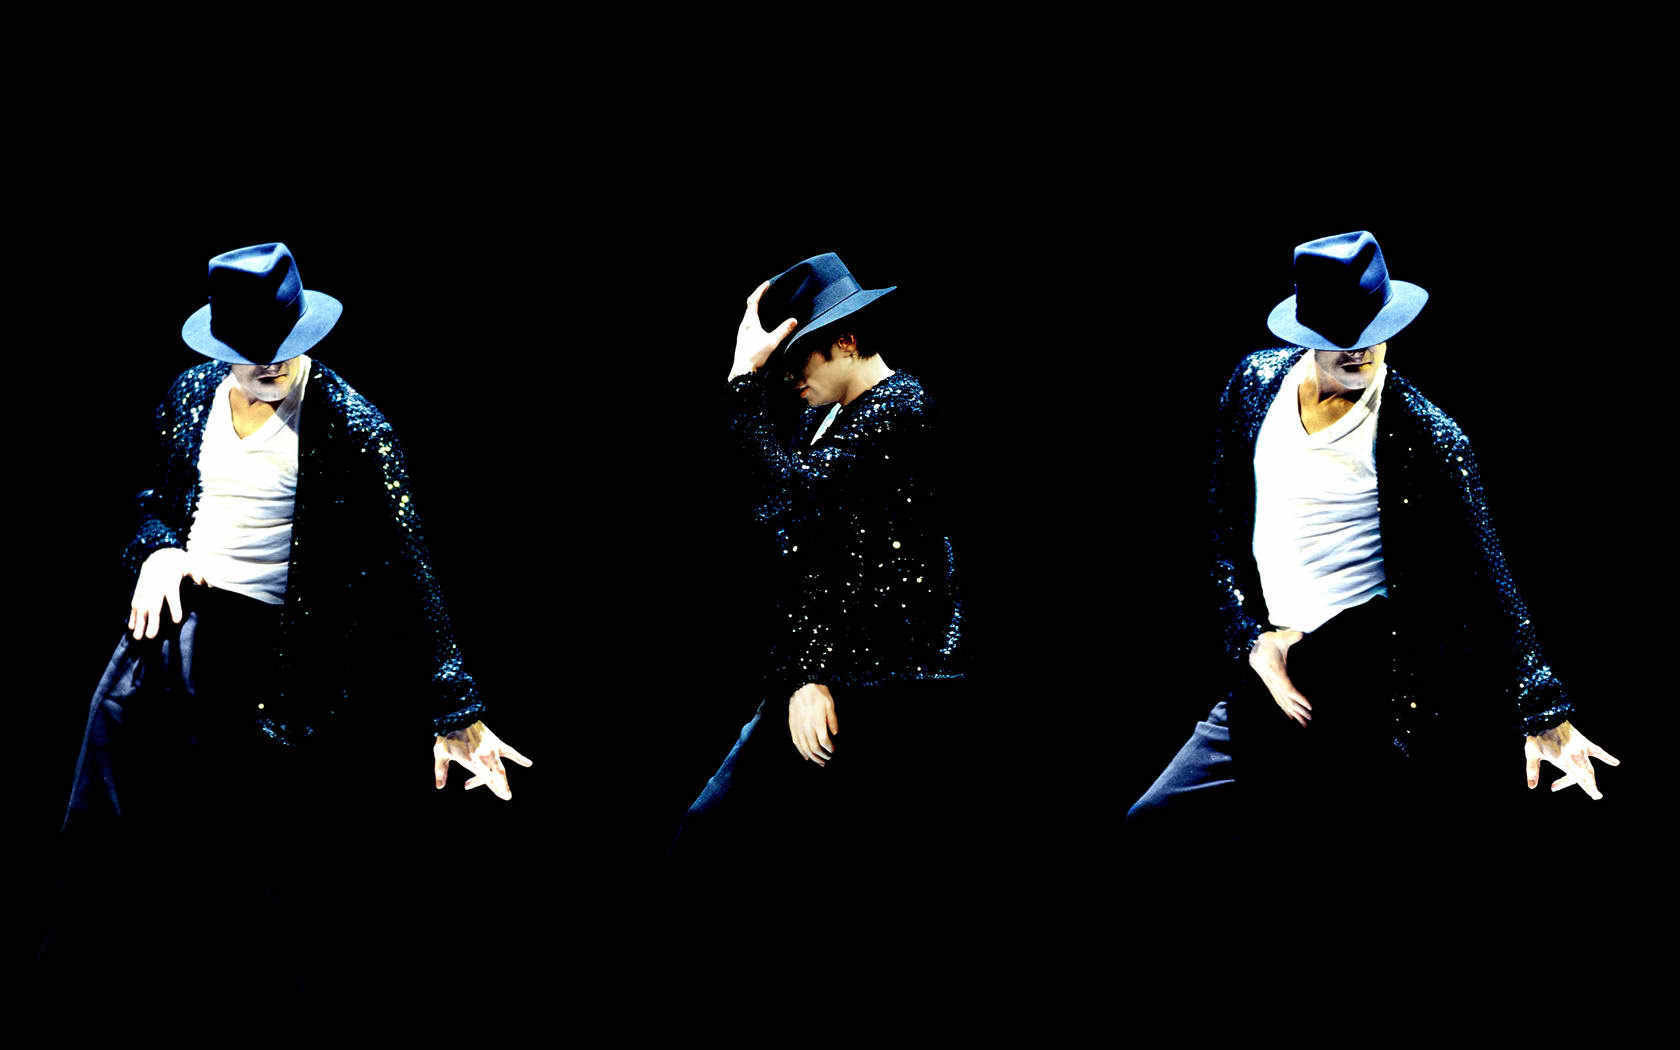 Michael-Jackson-Dance-Steps-HD-Wallpapers